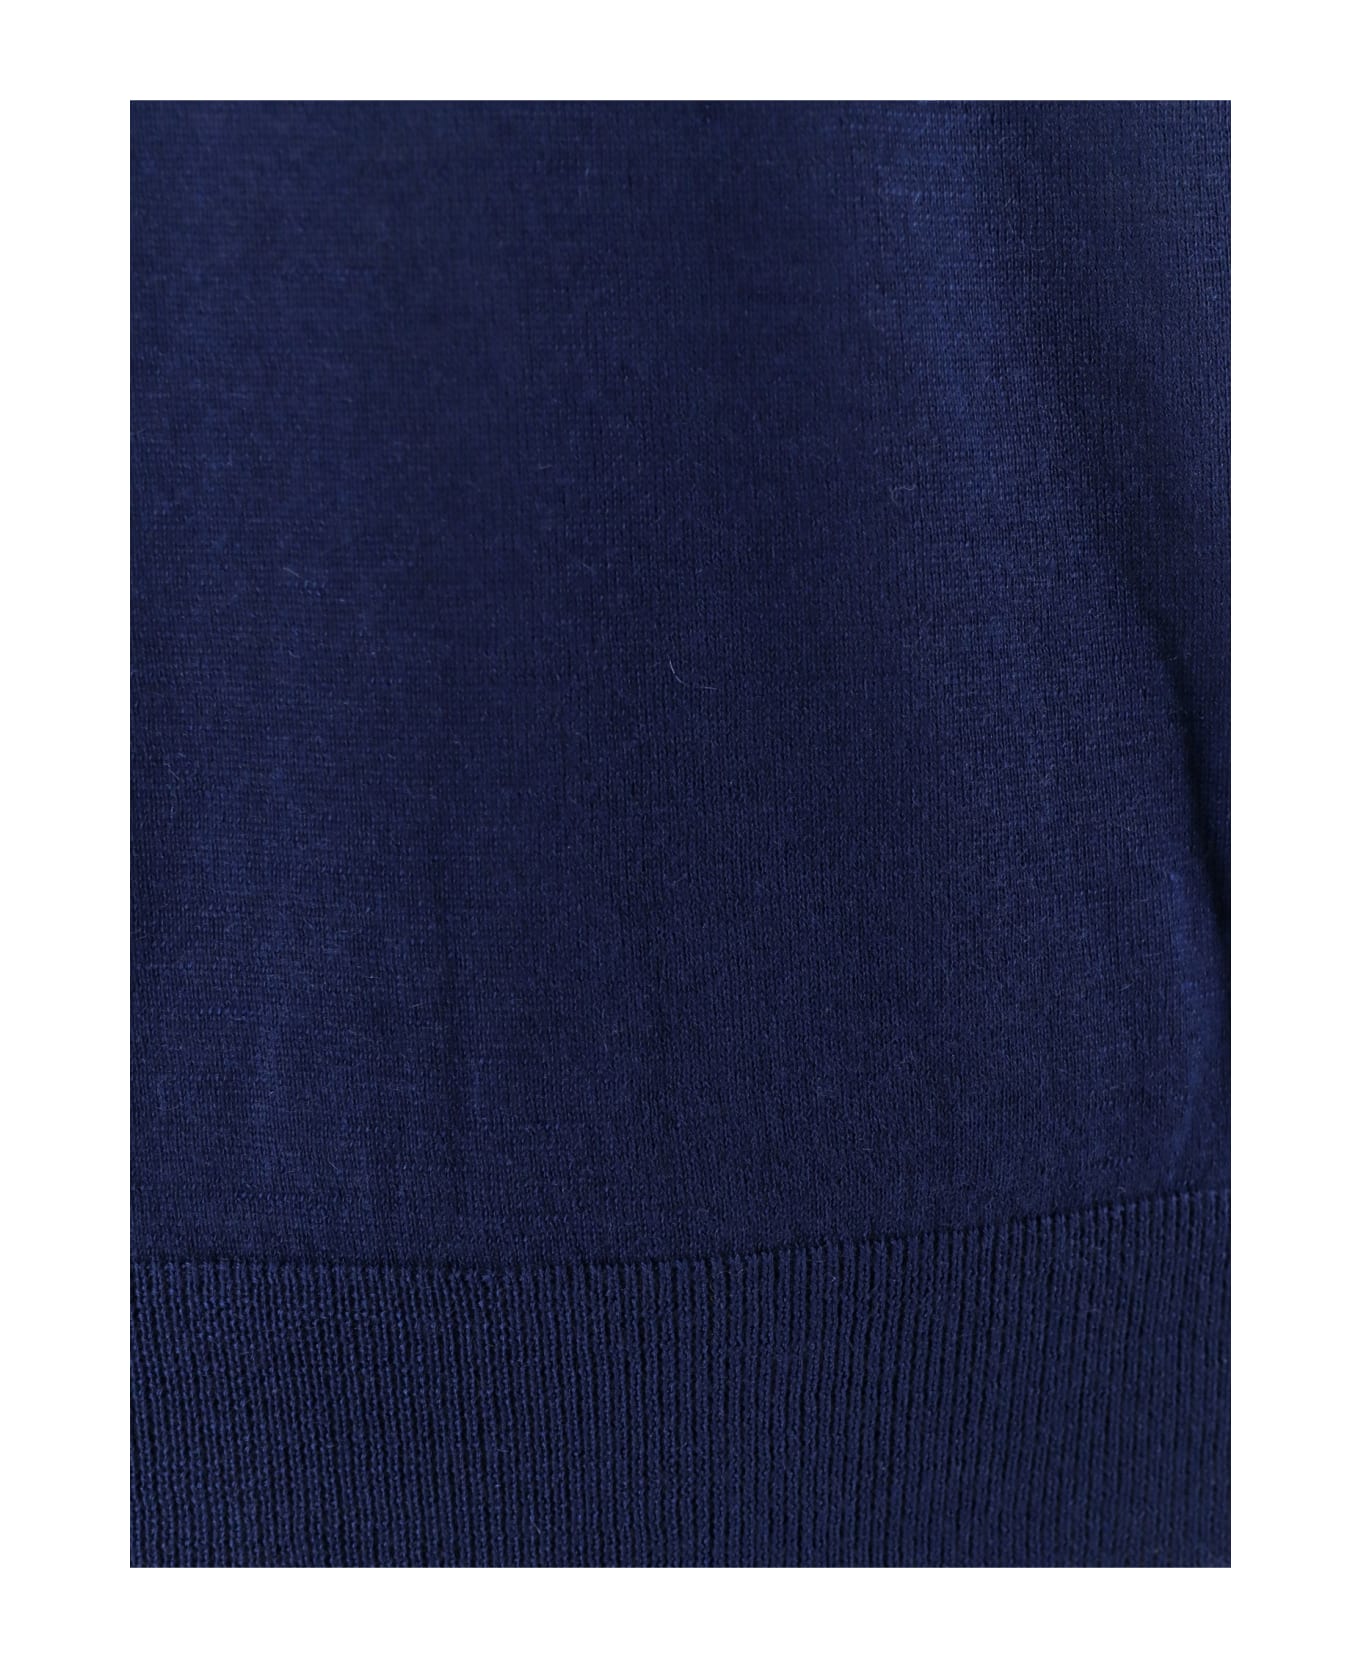 Corneliani Sweater - Blue